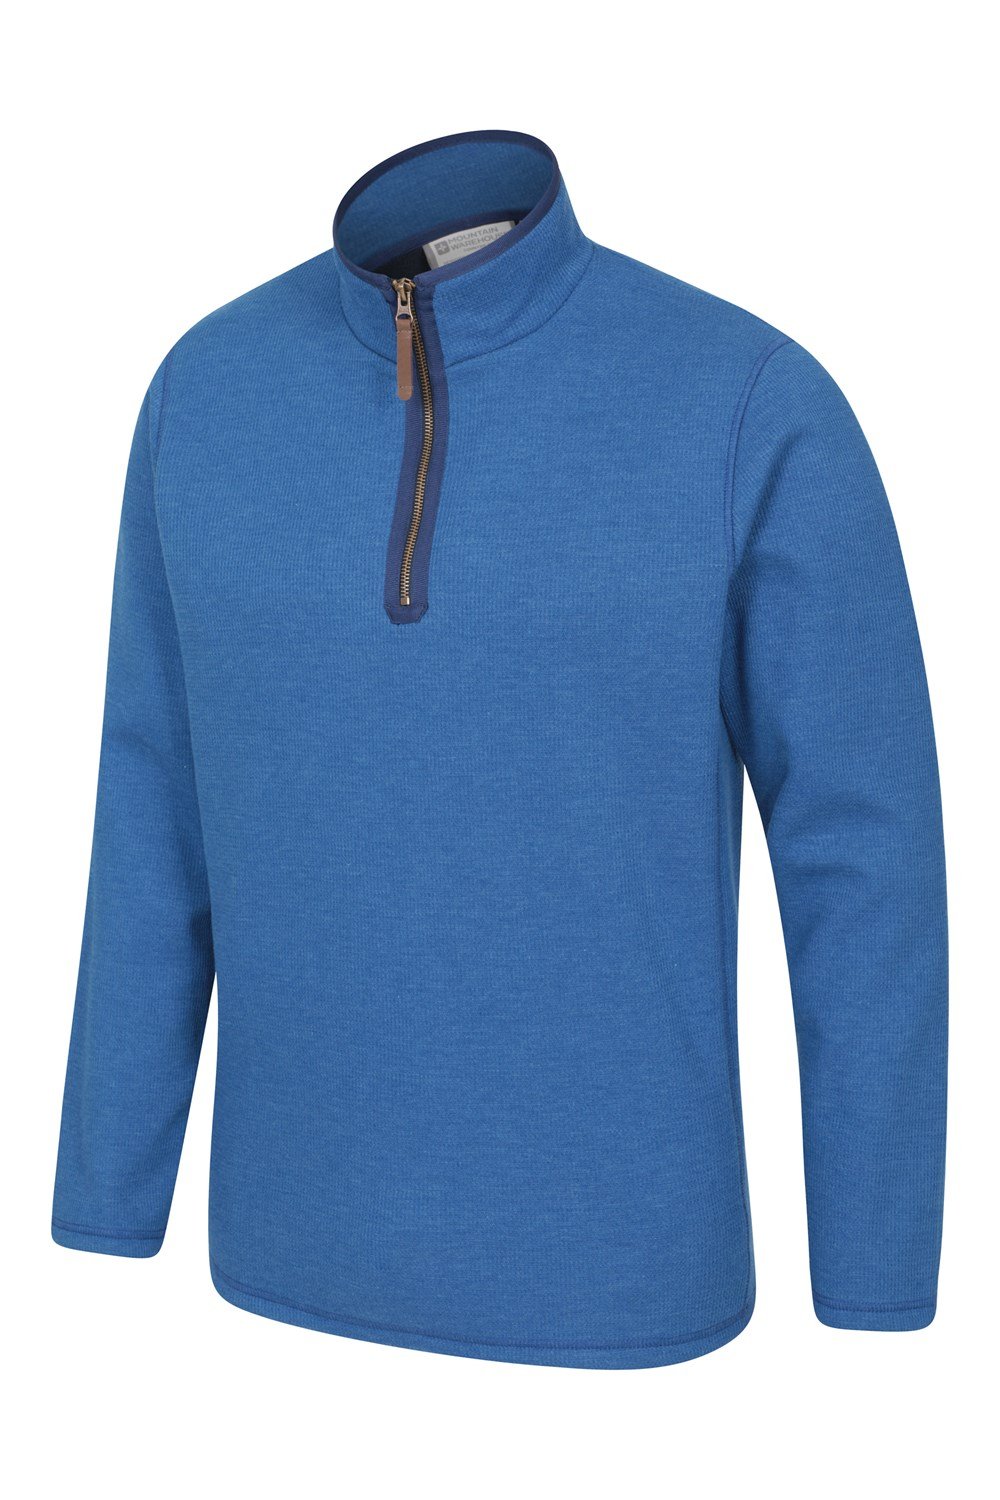 Mountain Warehouse Beta Contrast Mens Zip-Neck Top - Warm Sweater | eBay